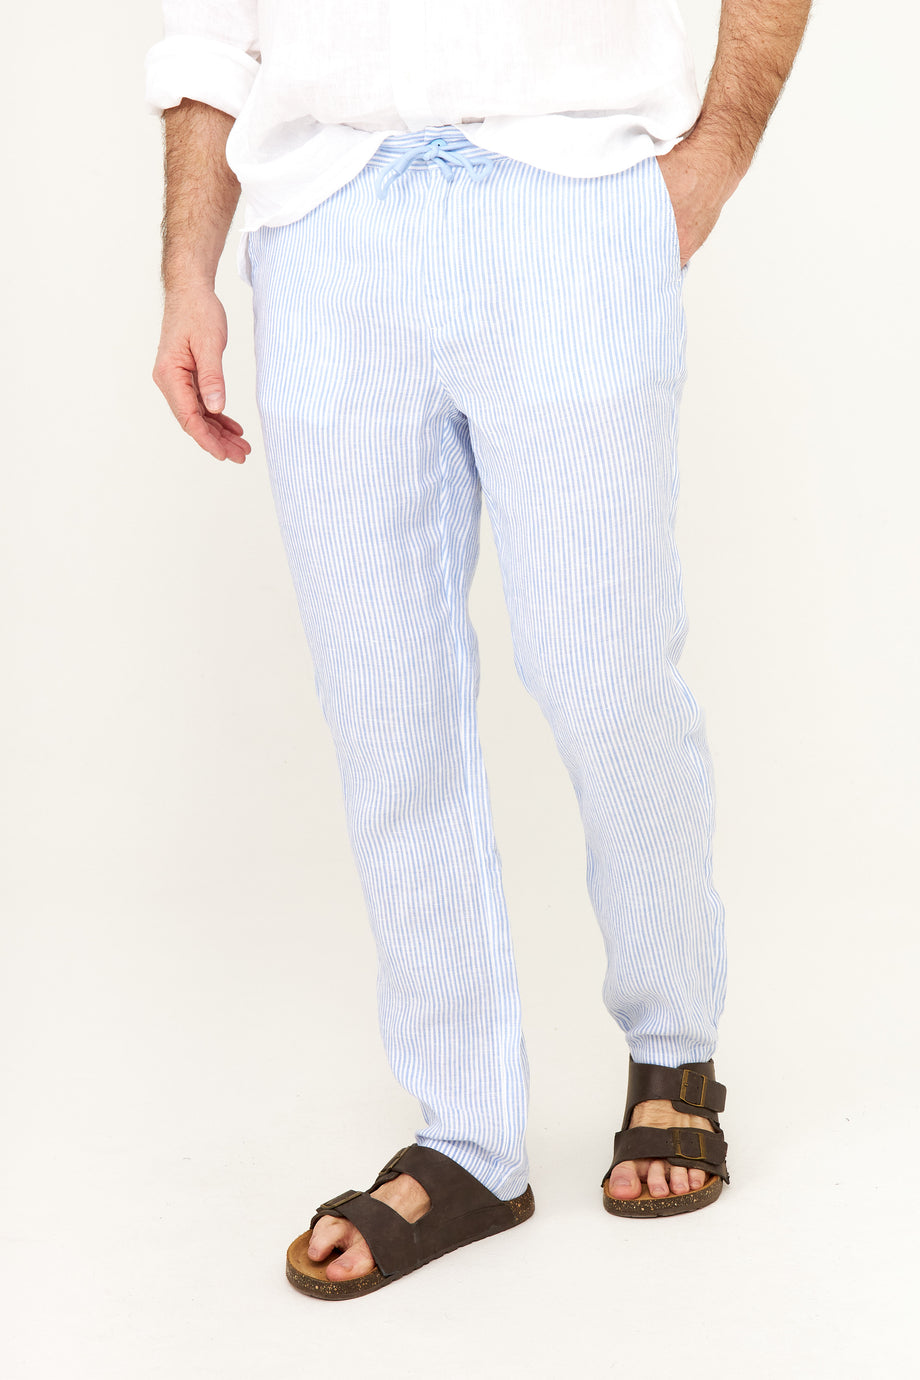 DPTO — No.198 Striped Blue Linen Trousers